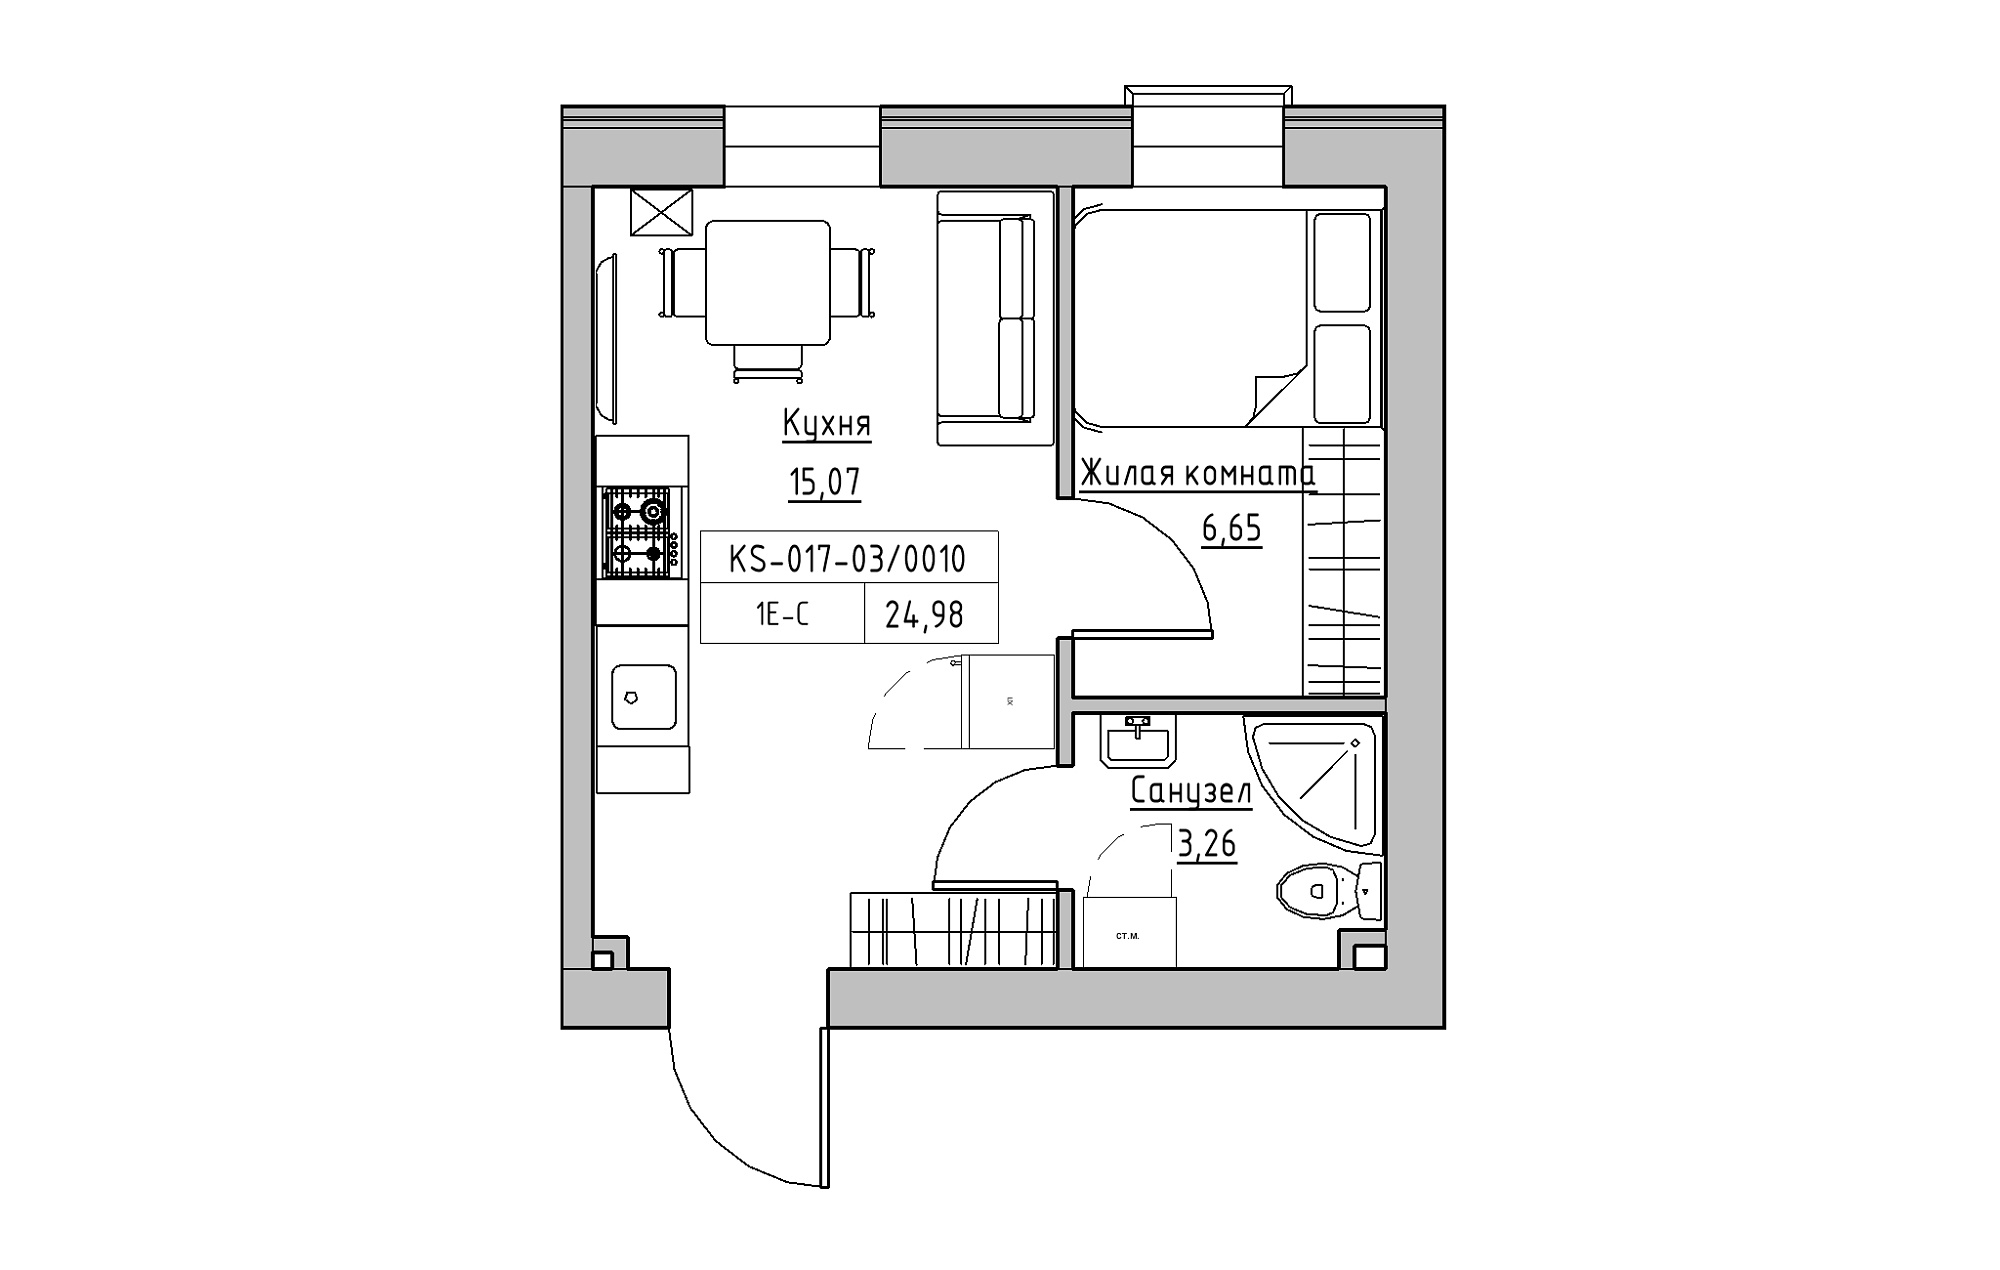 Planning 1-rm flats area 24.98m2, KS-017-03/0010.